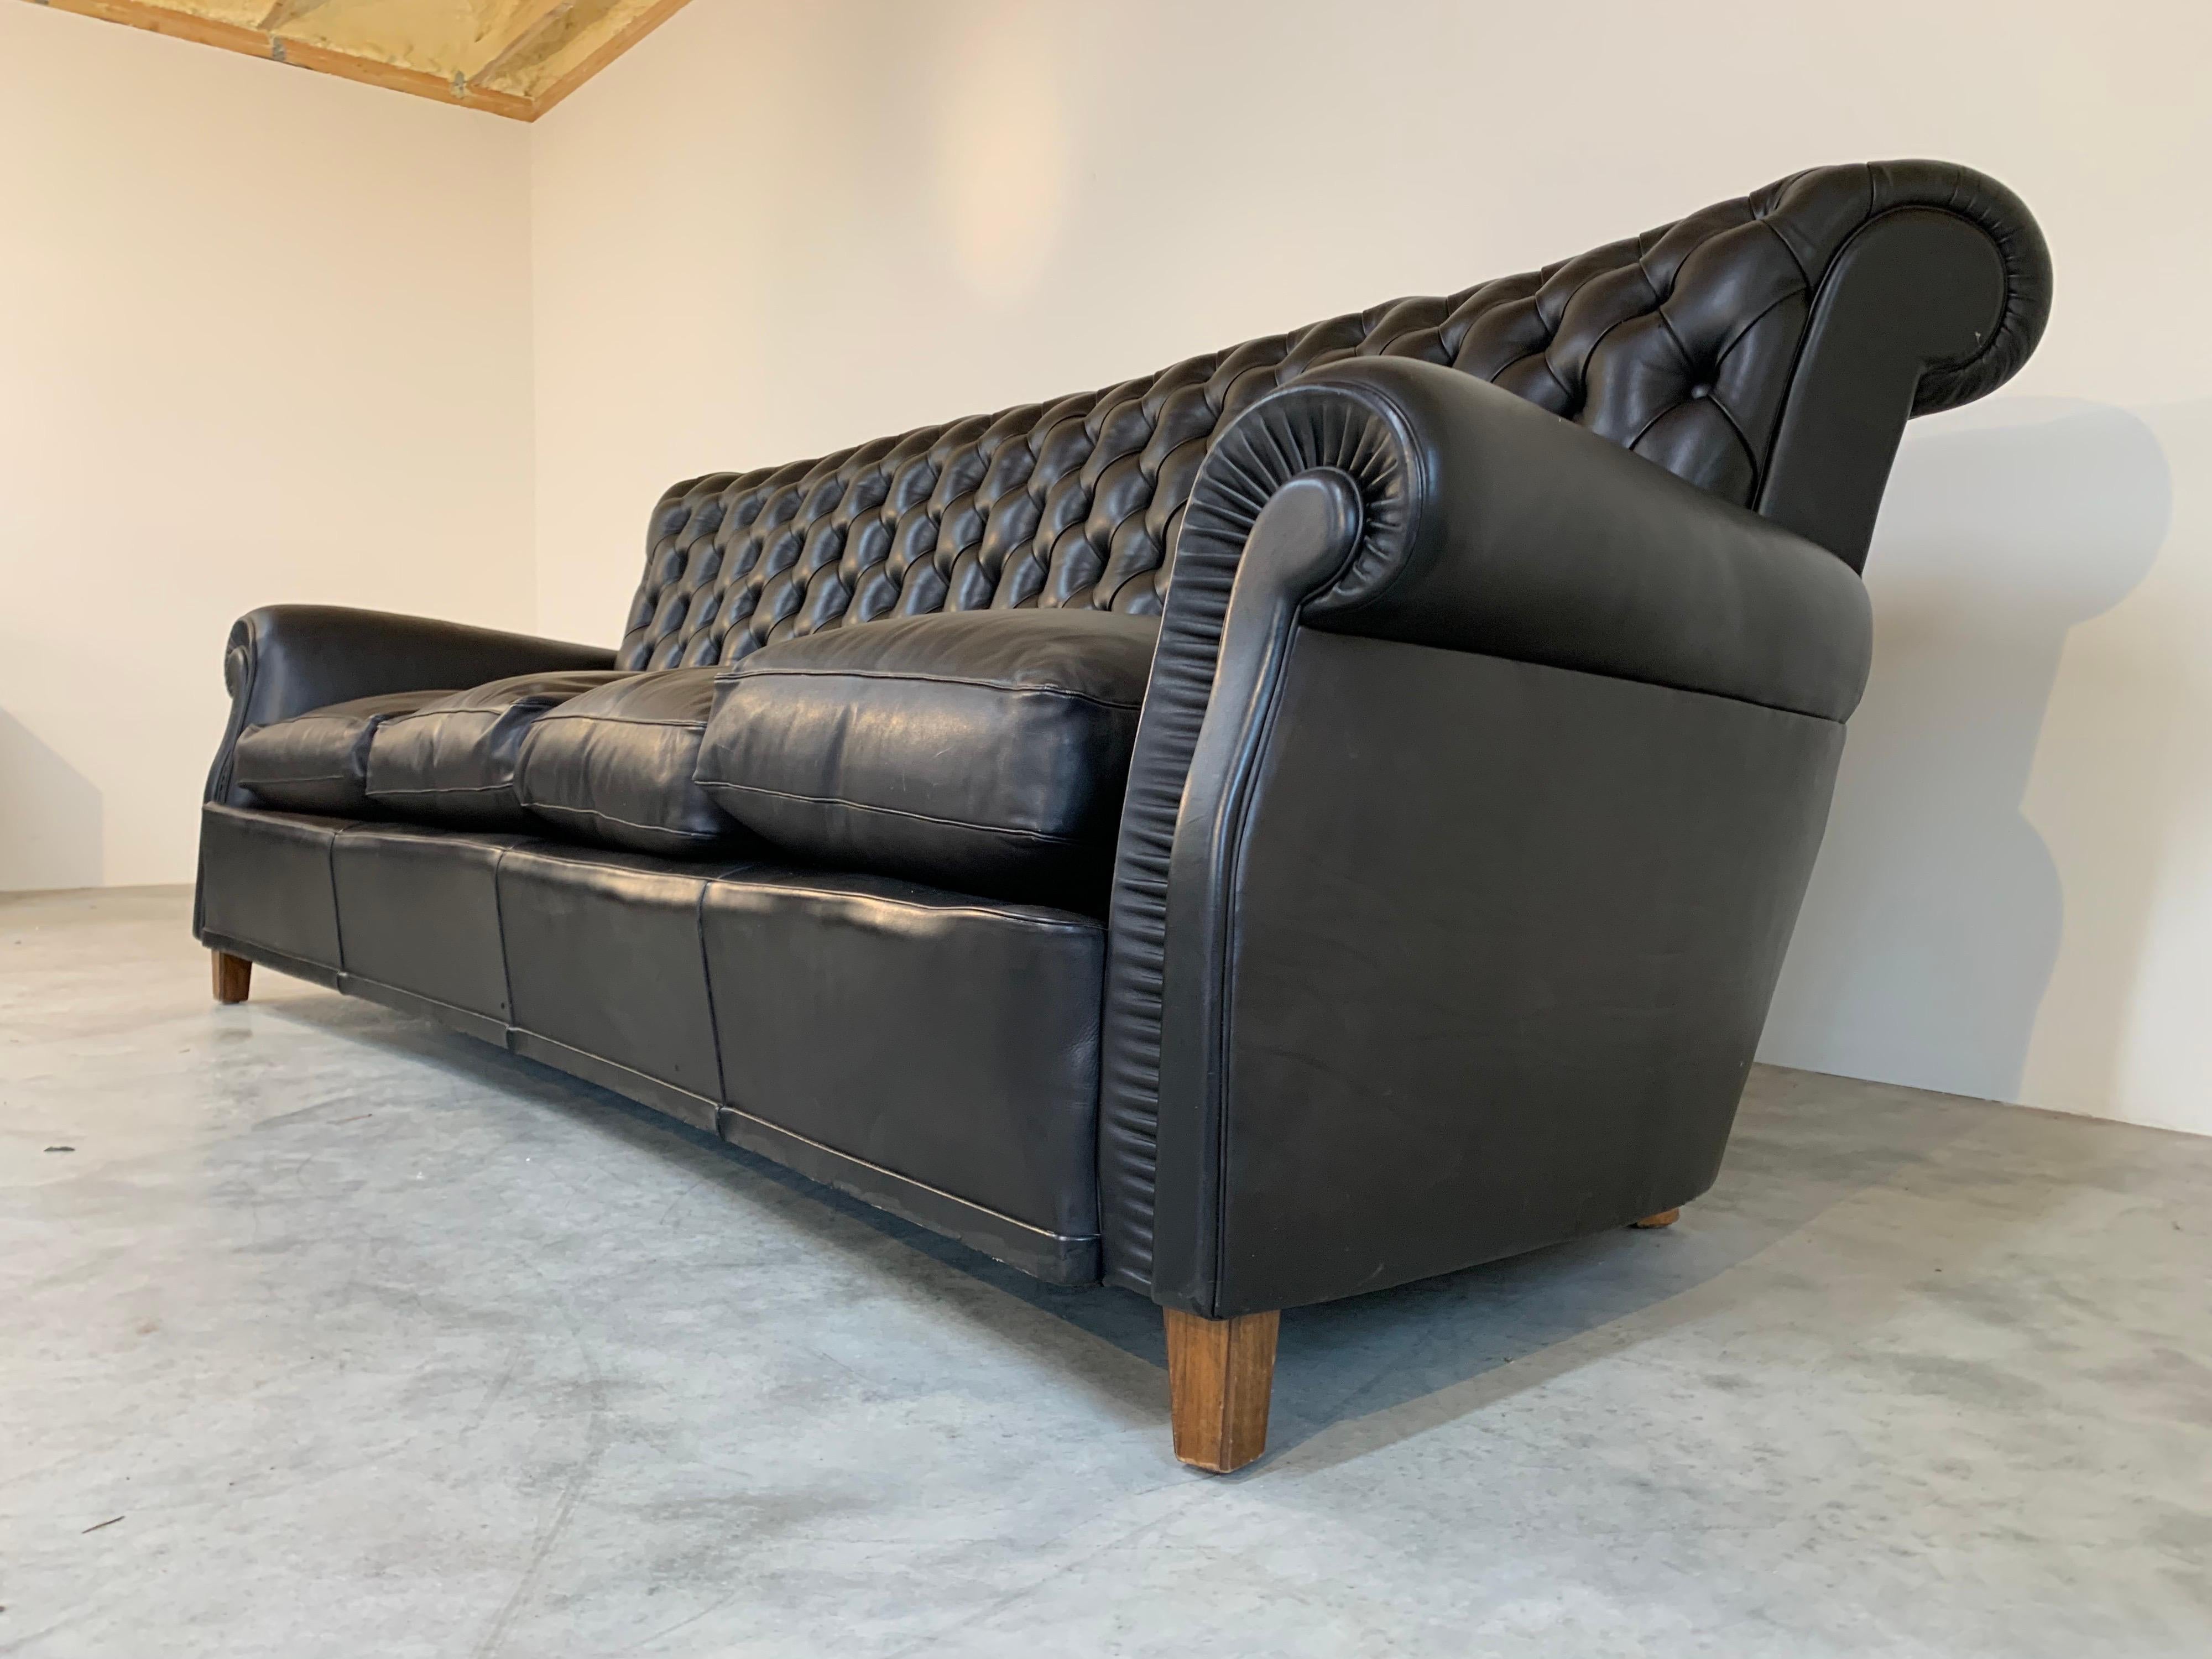 Italian Chesterfield Style Tufted Leather Sofa by Poltrona Frau, Italy, 1967